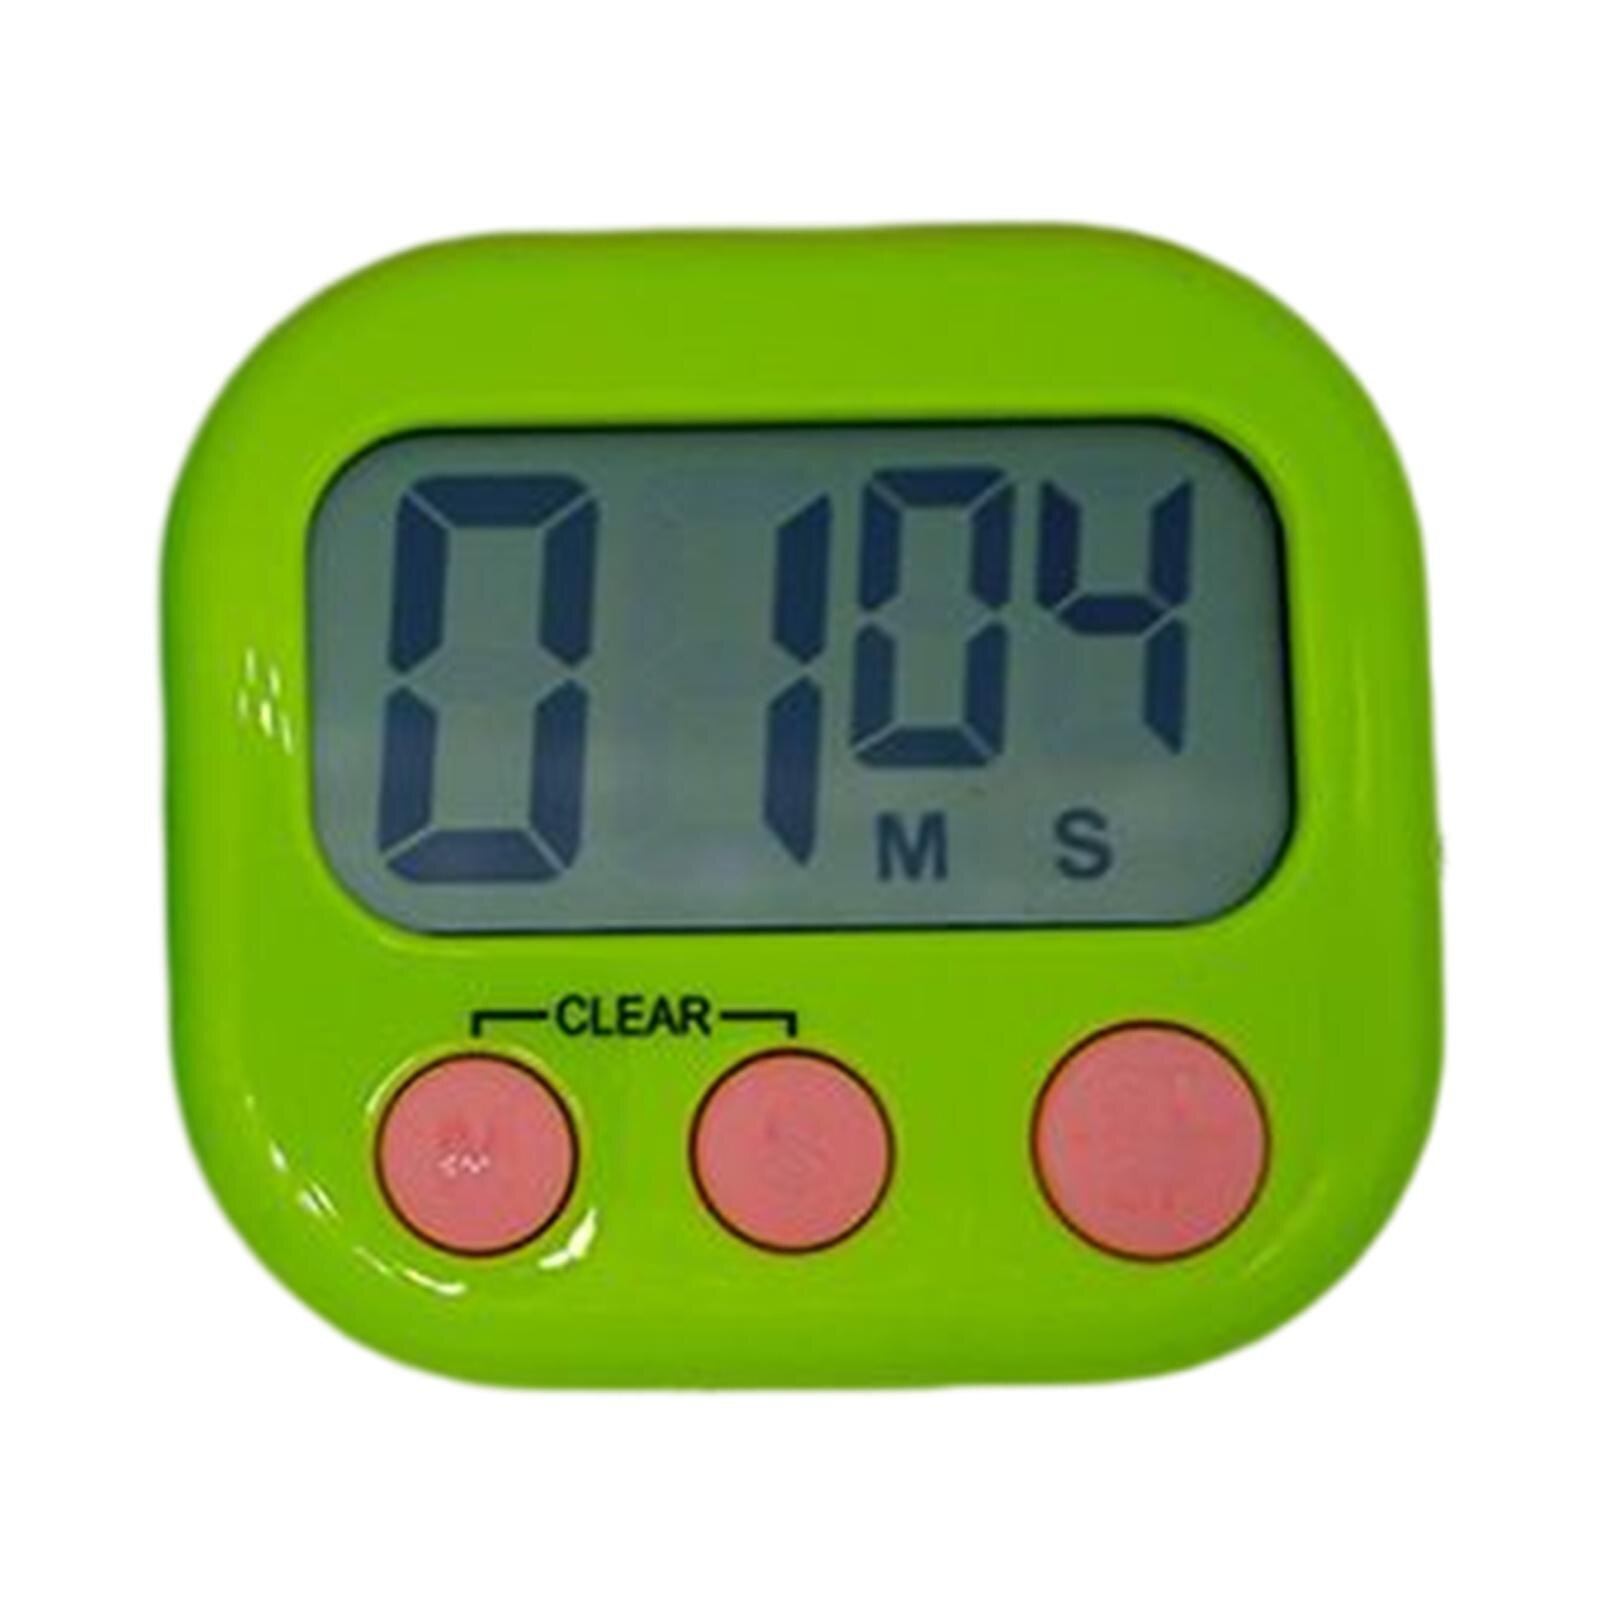 Digital Timer LCD Screen Loud Alarm Classroom Timer for Teacher Supplies Baking Office Sports Games Cooking